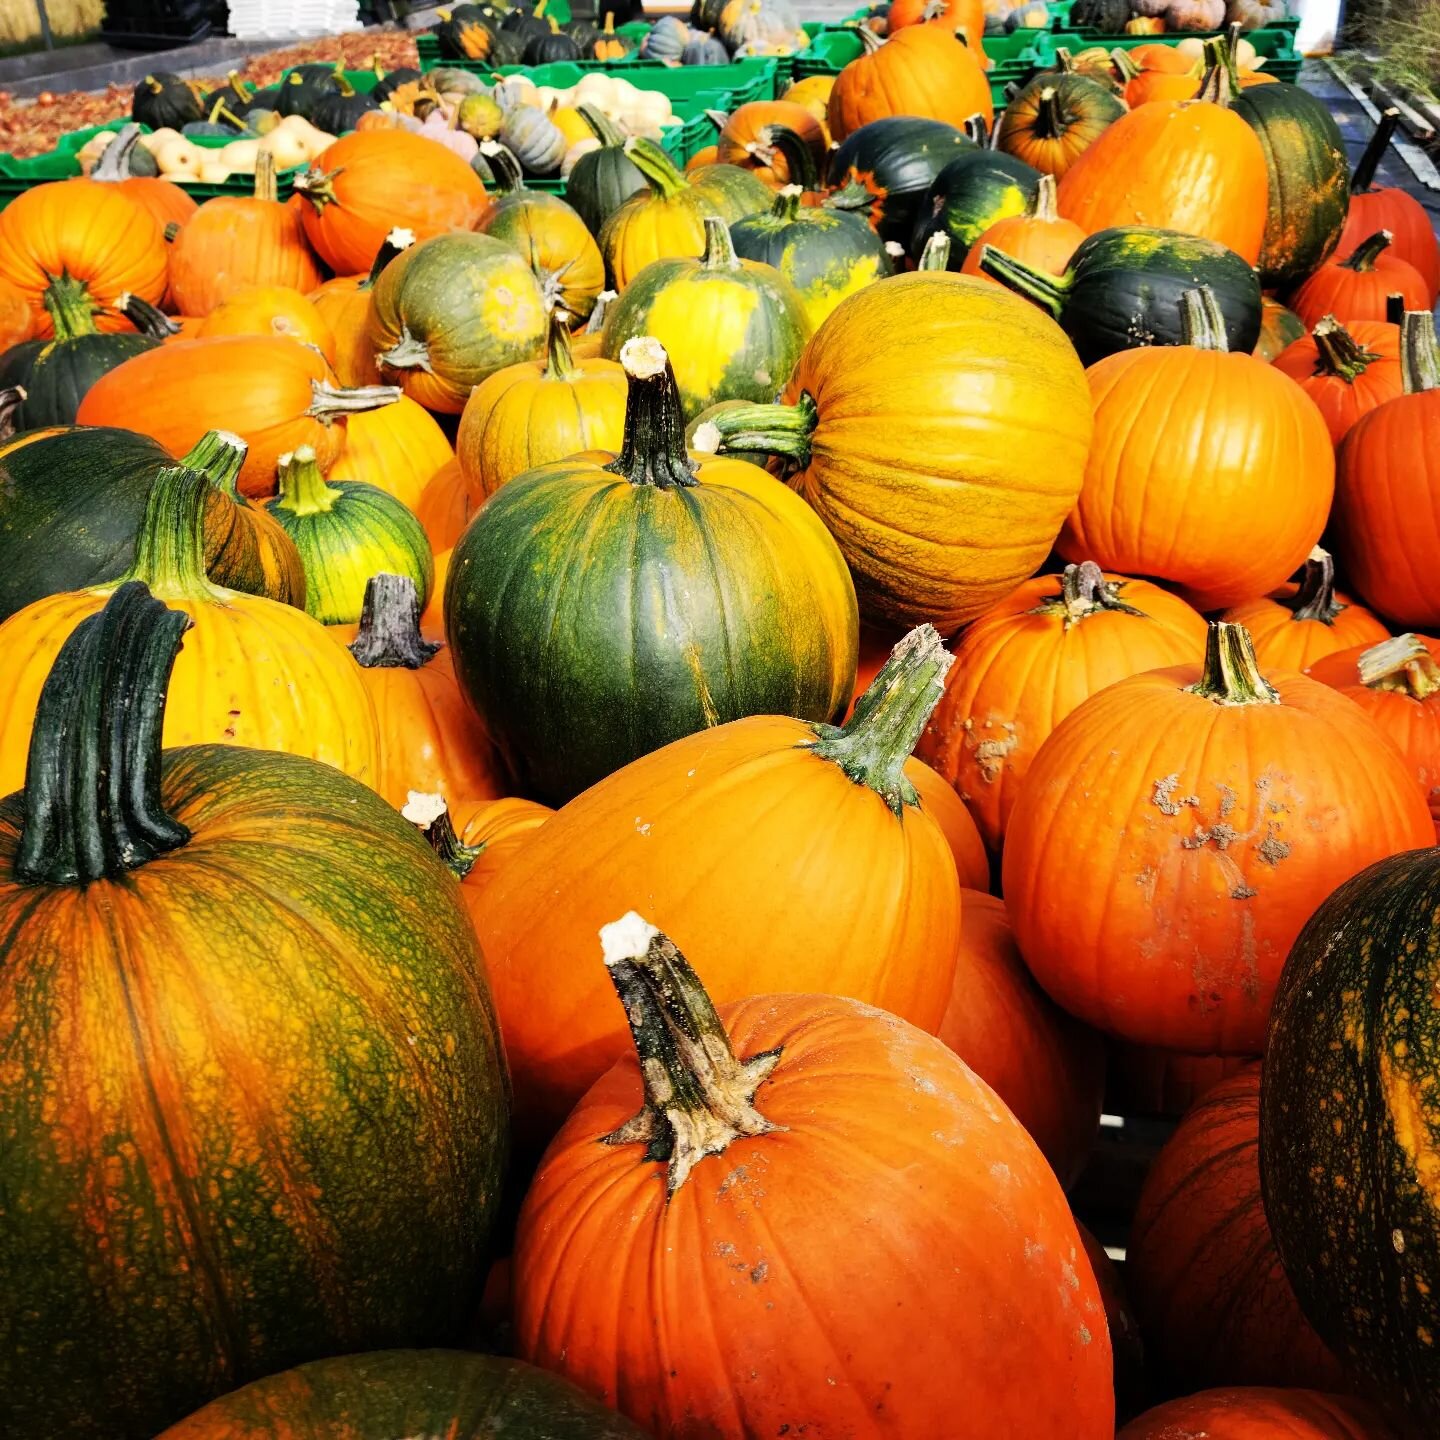 Fall is almost here!  So much abundance. 

#pumpkin #wintersquash #heavylifting #jackolantern #certifiedorganic #mofga